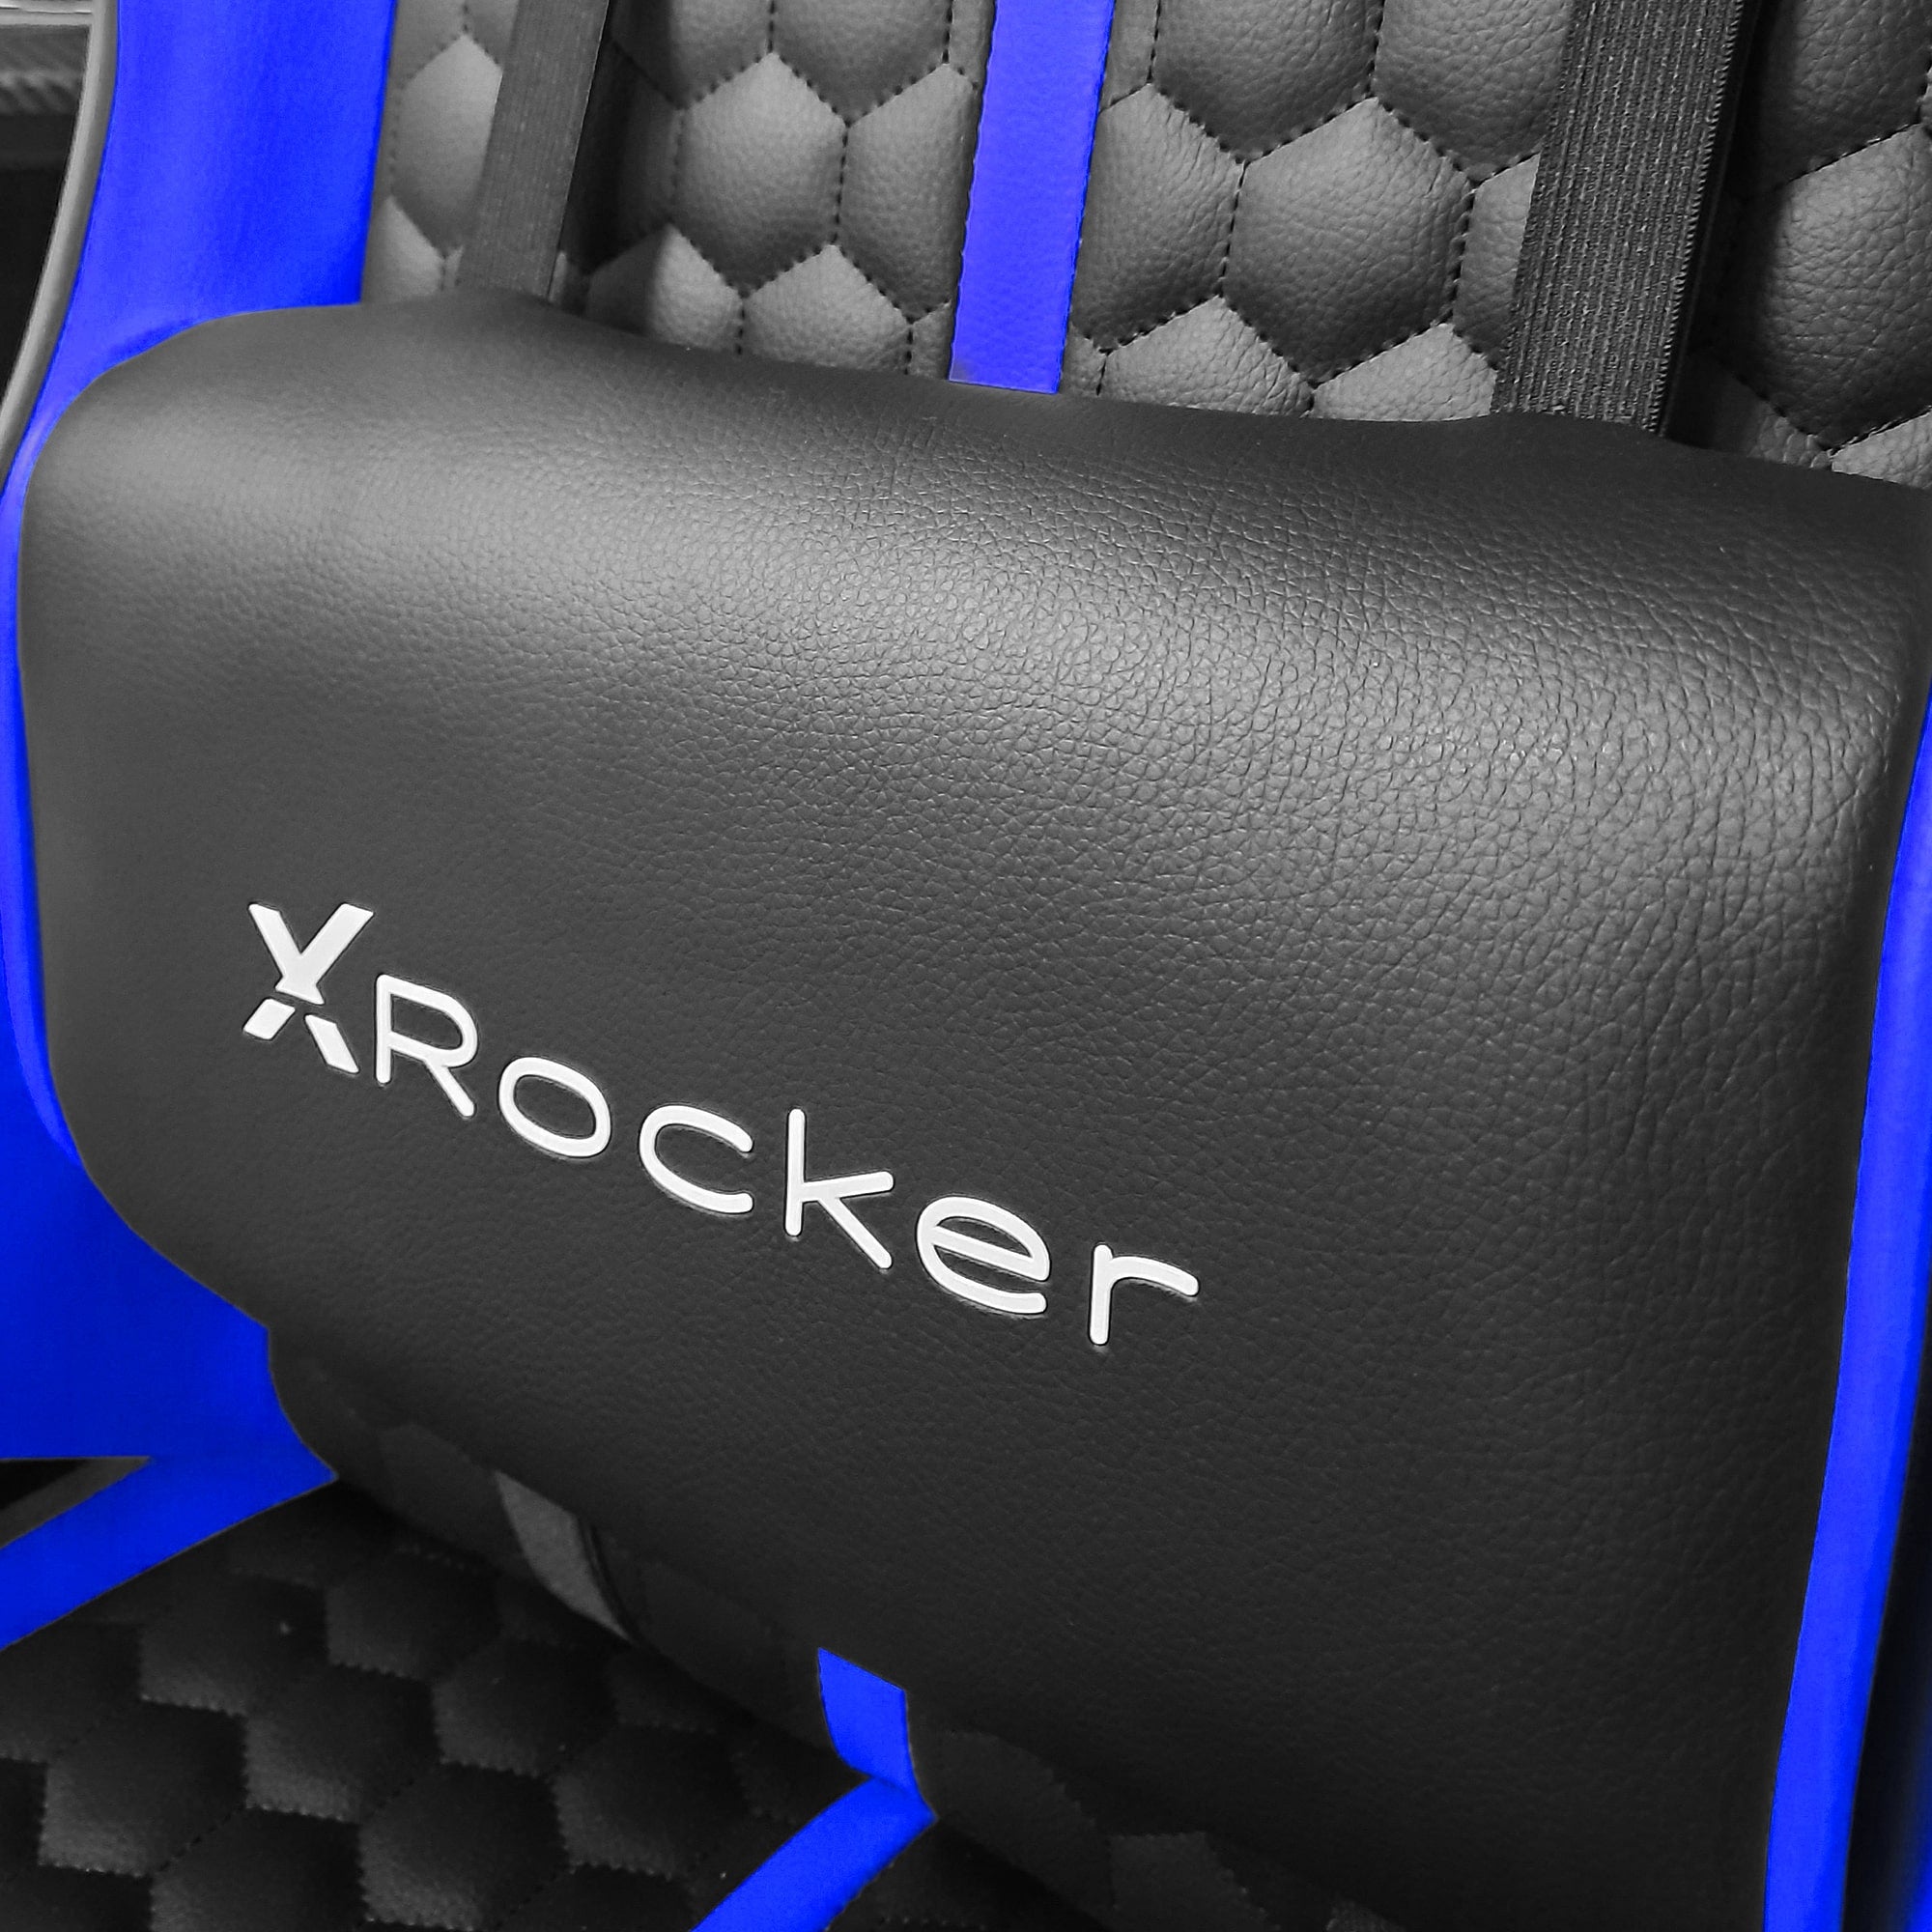 X Rocker Arteon Junior Gaming Chair - Blue